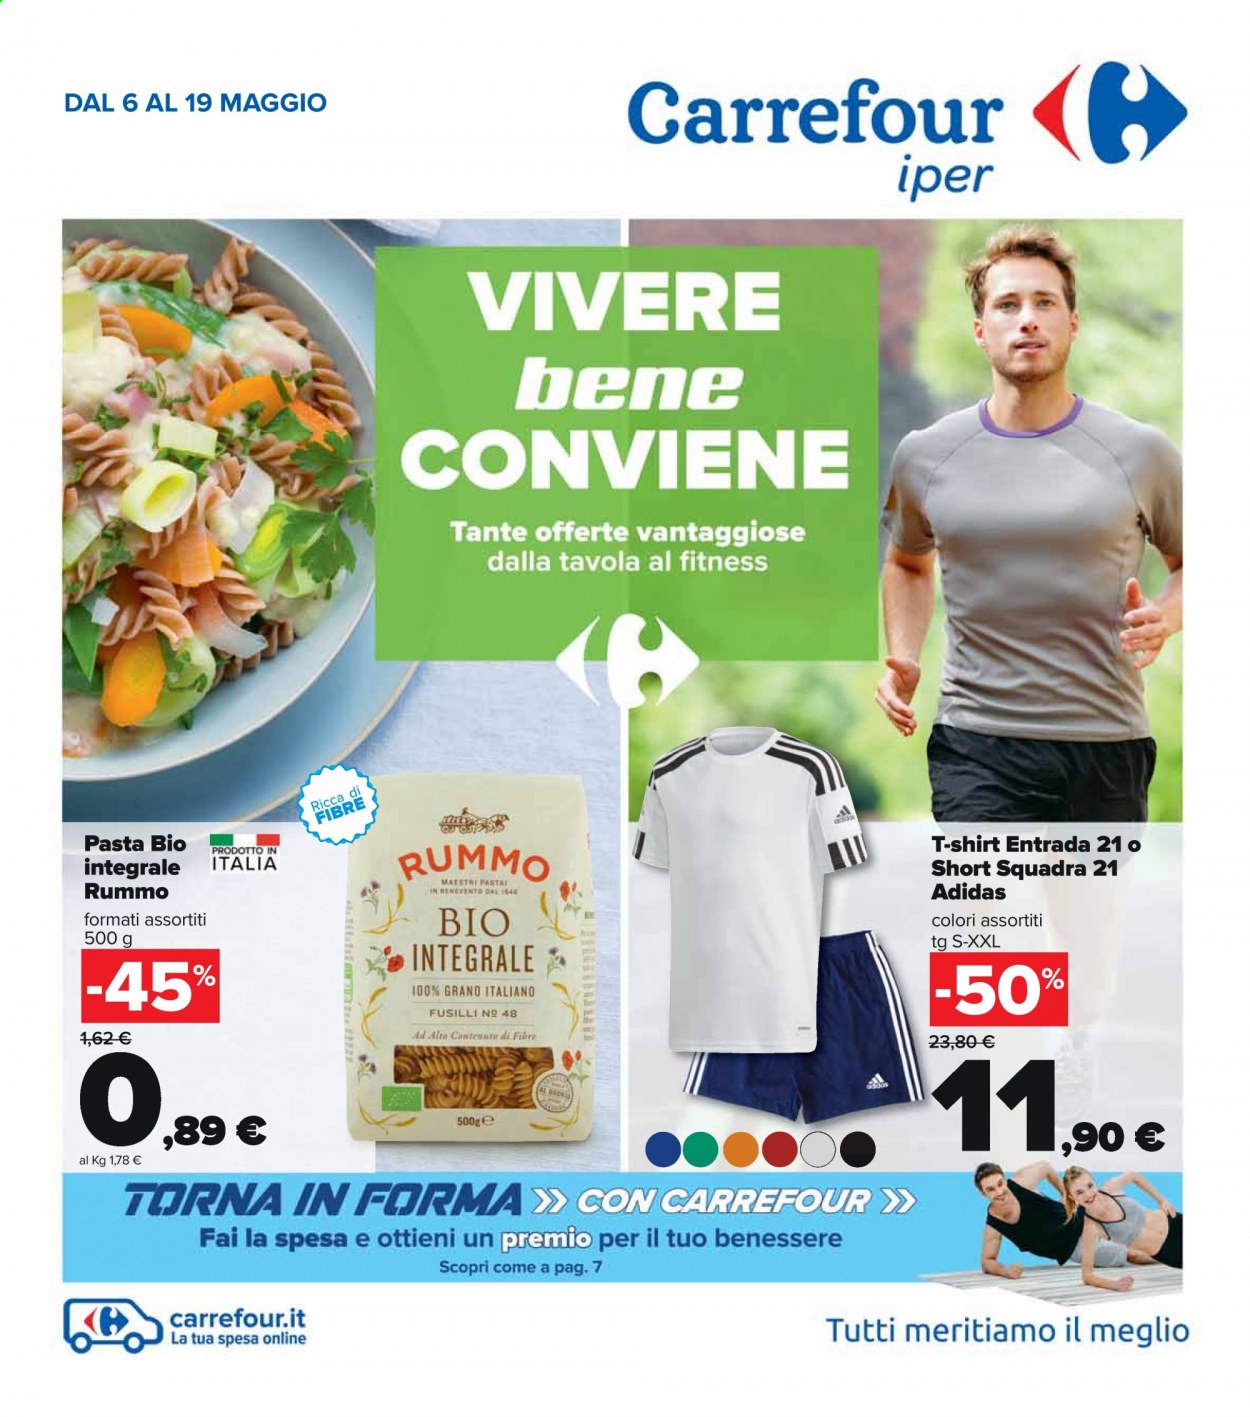 thumbnail - Volantino Carrefour - 6/5/2021 - 19/5/2021 - Prodotti in offerta - Adidas, pasta, fusilli, Rummo, t-shirt. Pagina 1.